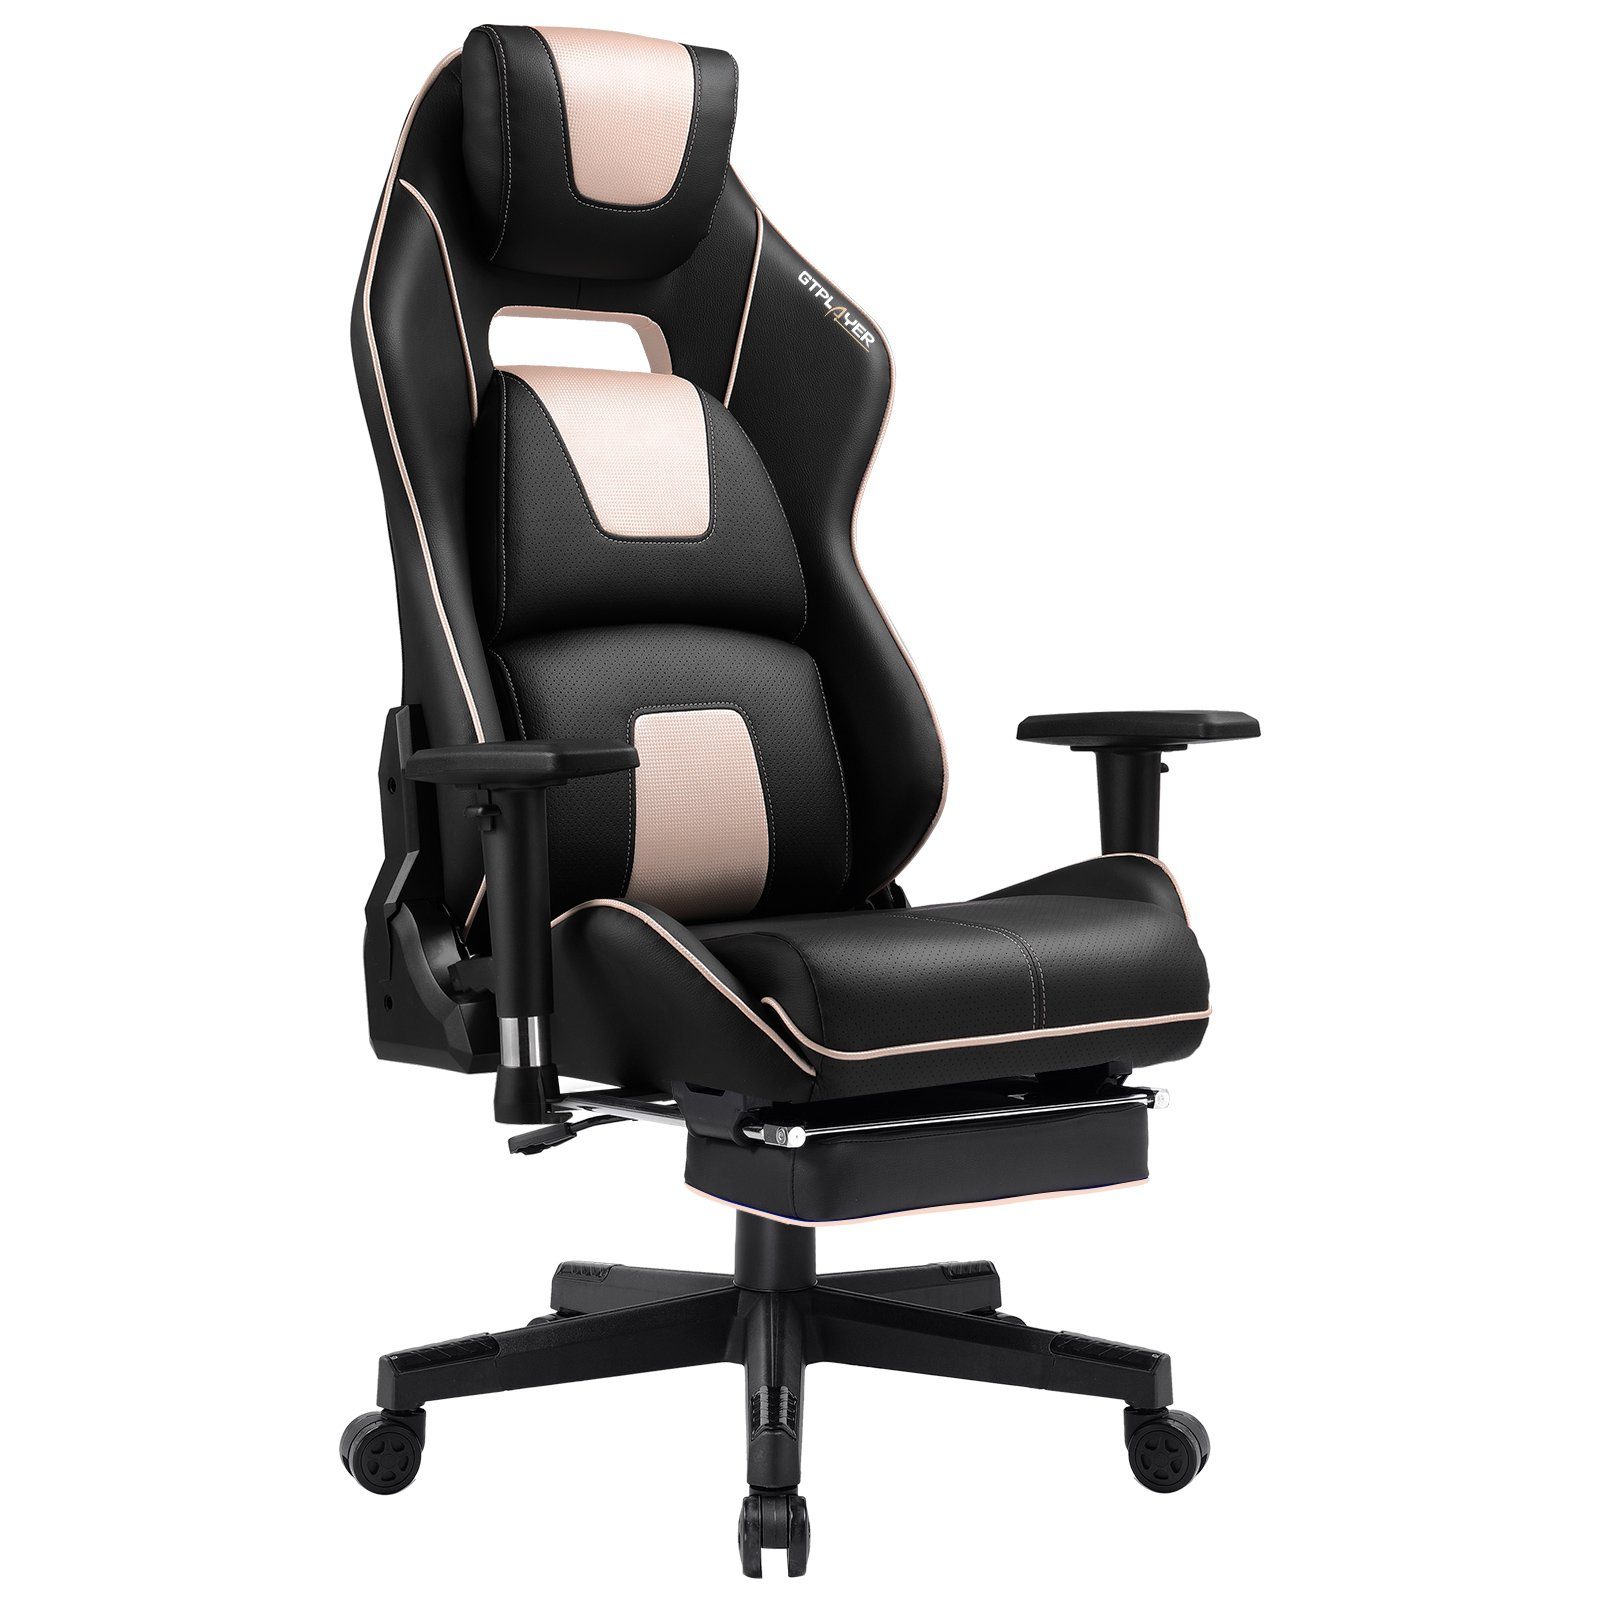 GTPLAYER Gaming-Stuhl Bürostuhl Gaming Stuhl